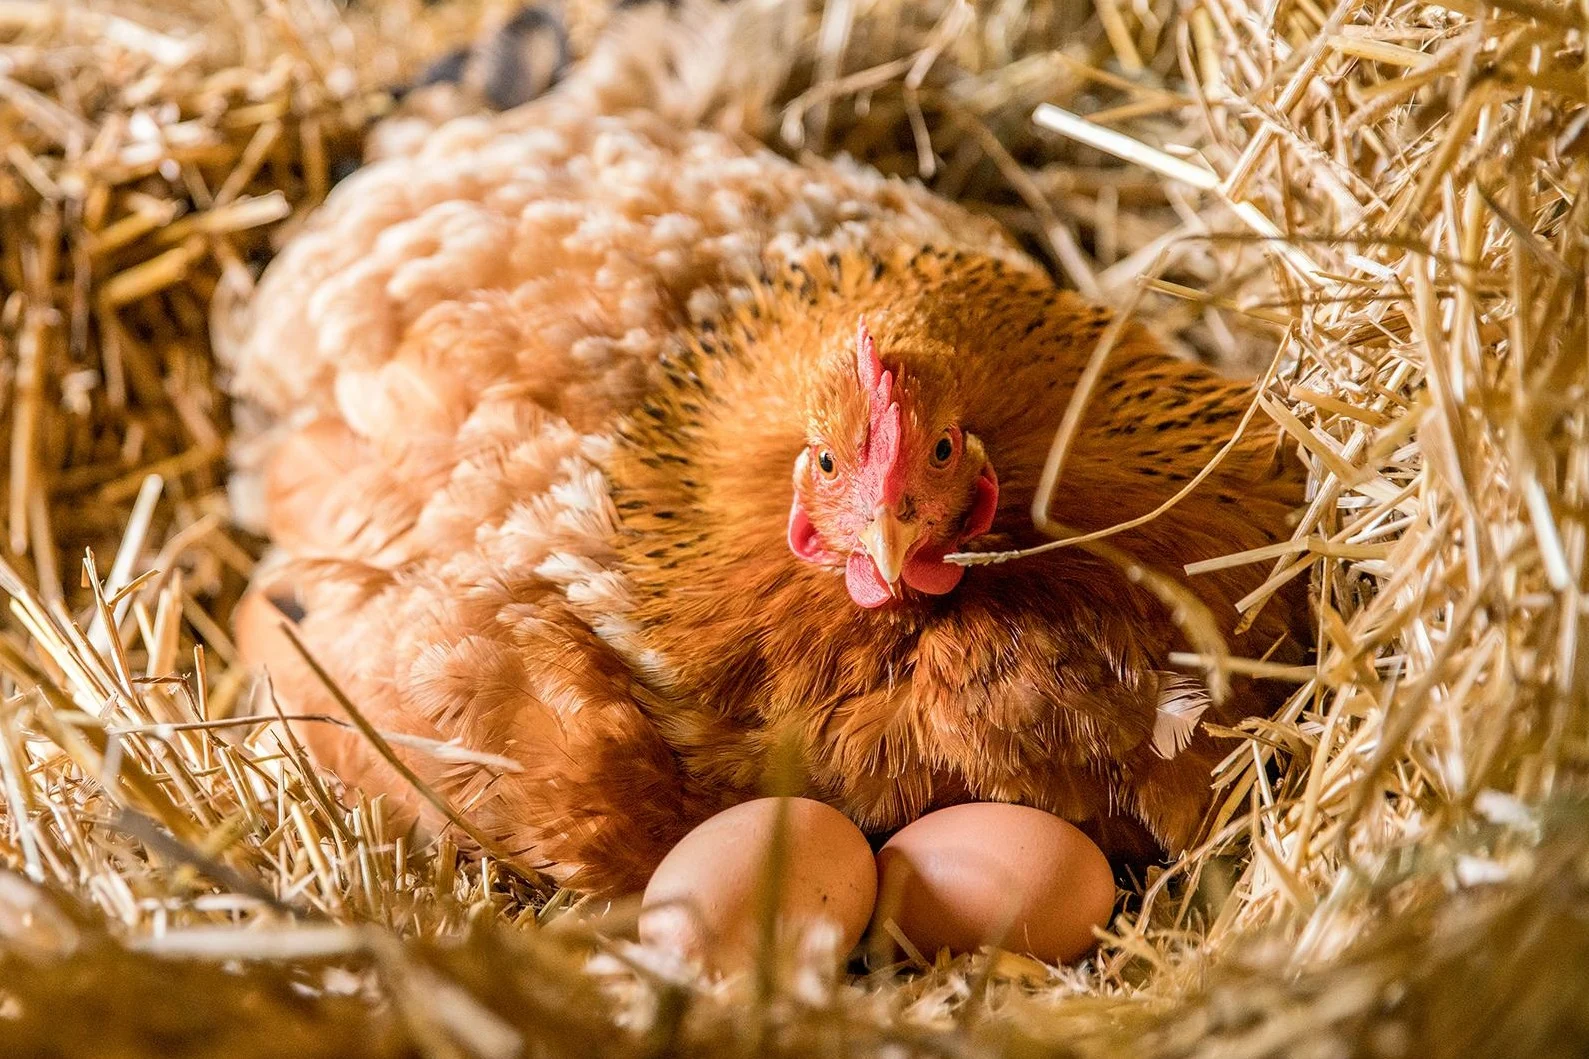 A brown hen broods over her eggs.